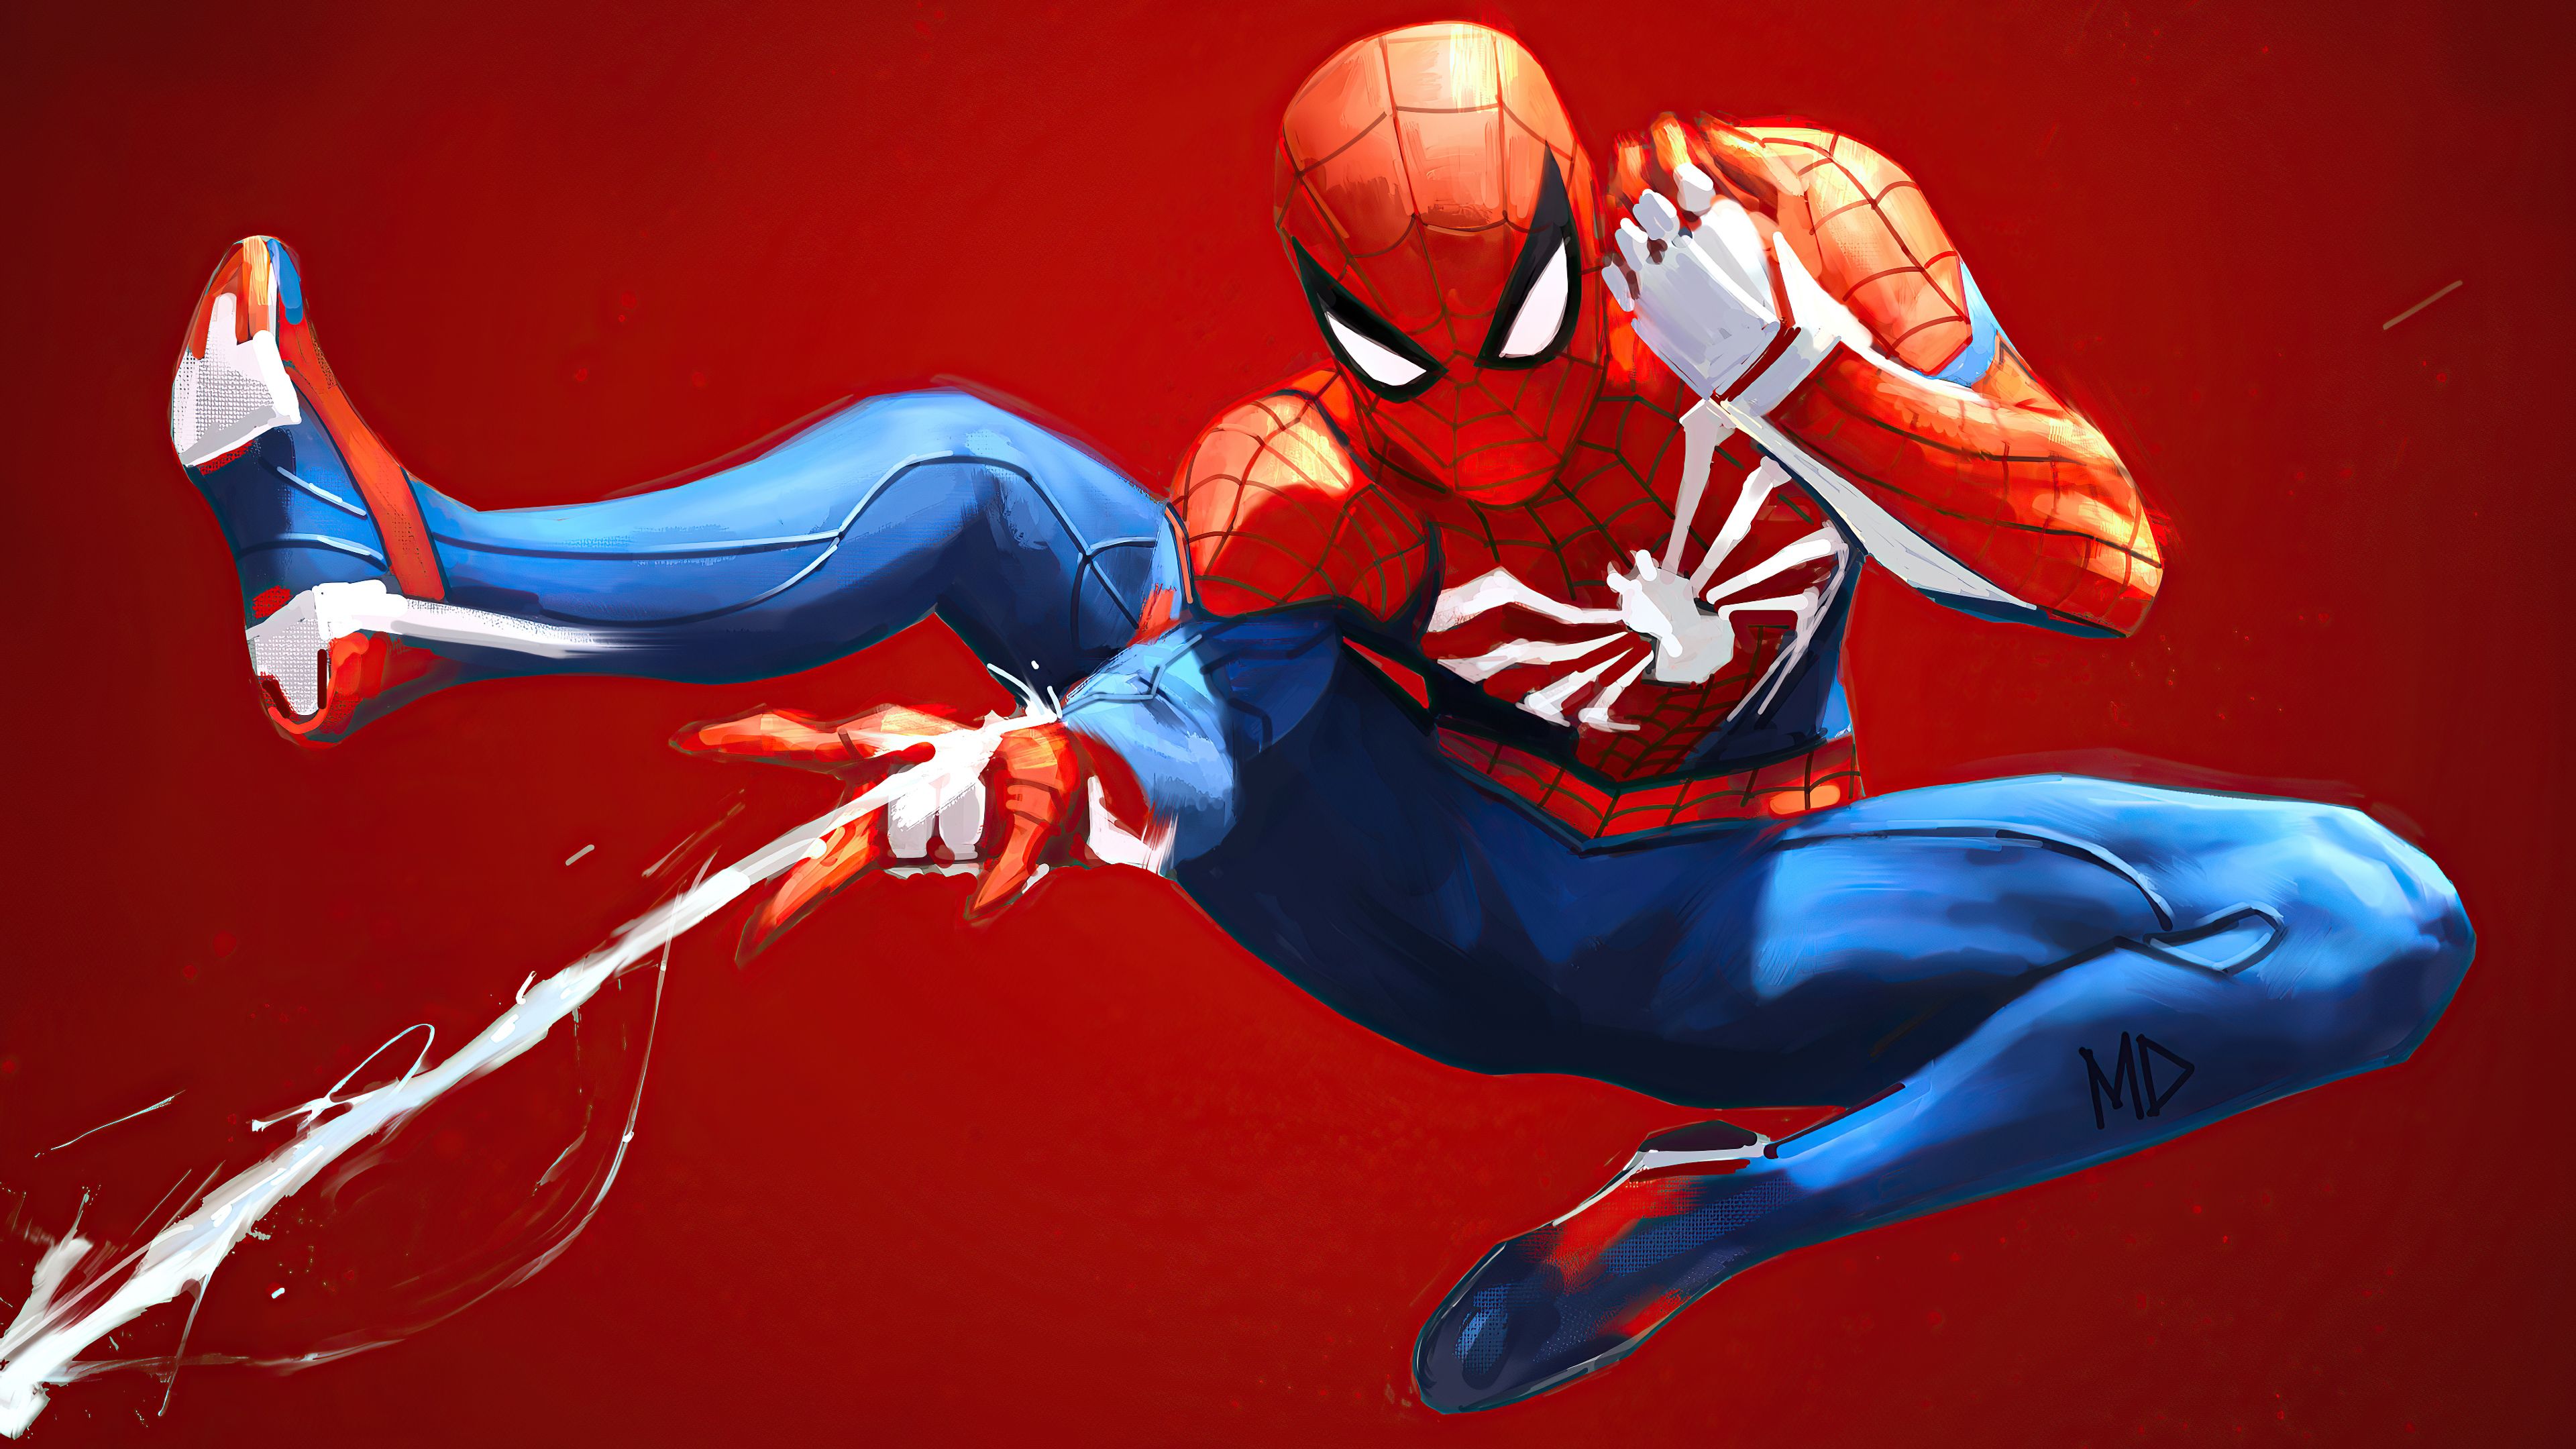 Spider Man Web Shooter 4k, HD Superheroes, 4k Wallpapers, Image, Background...